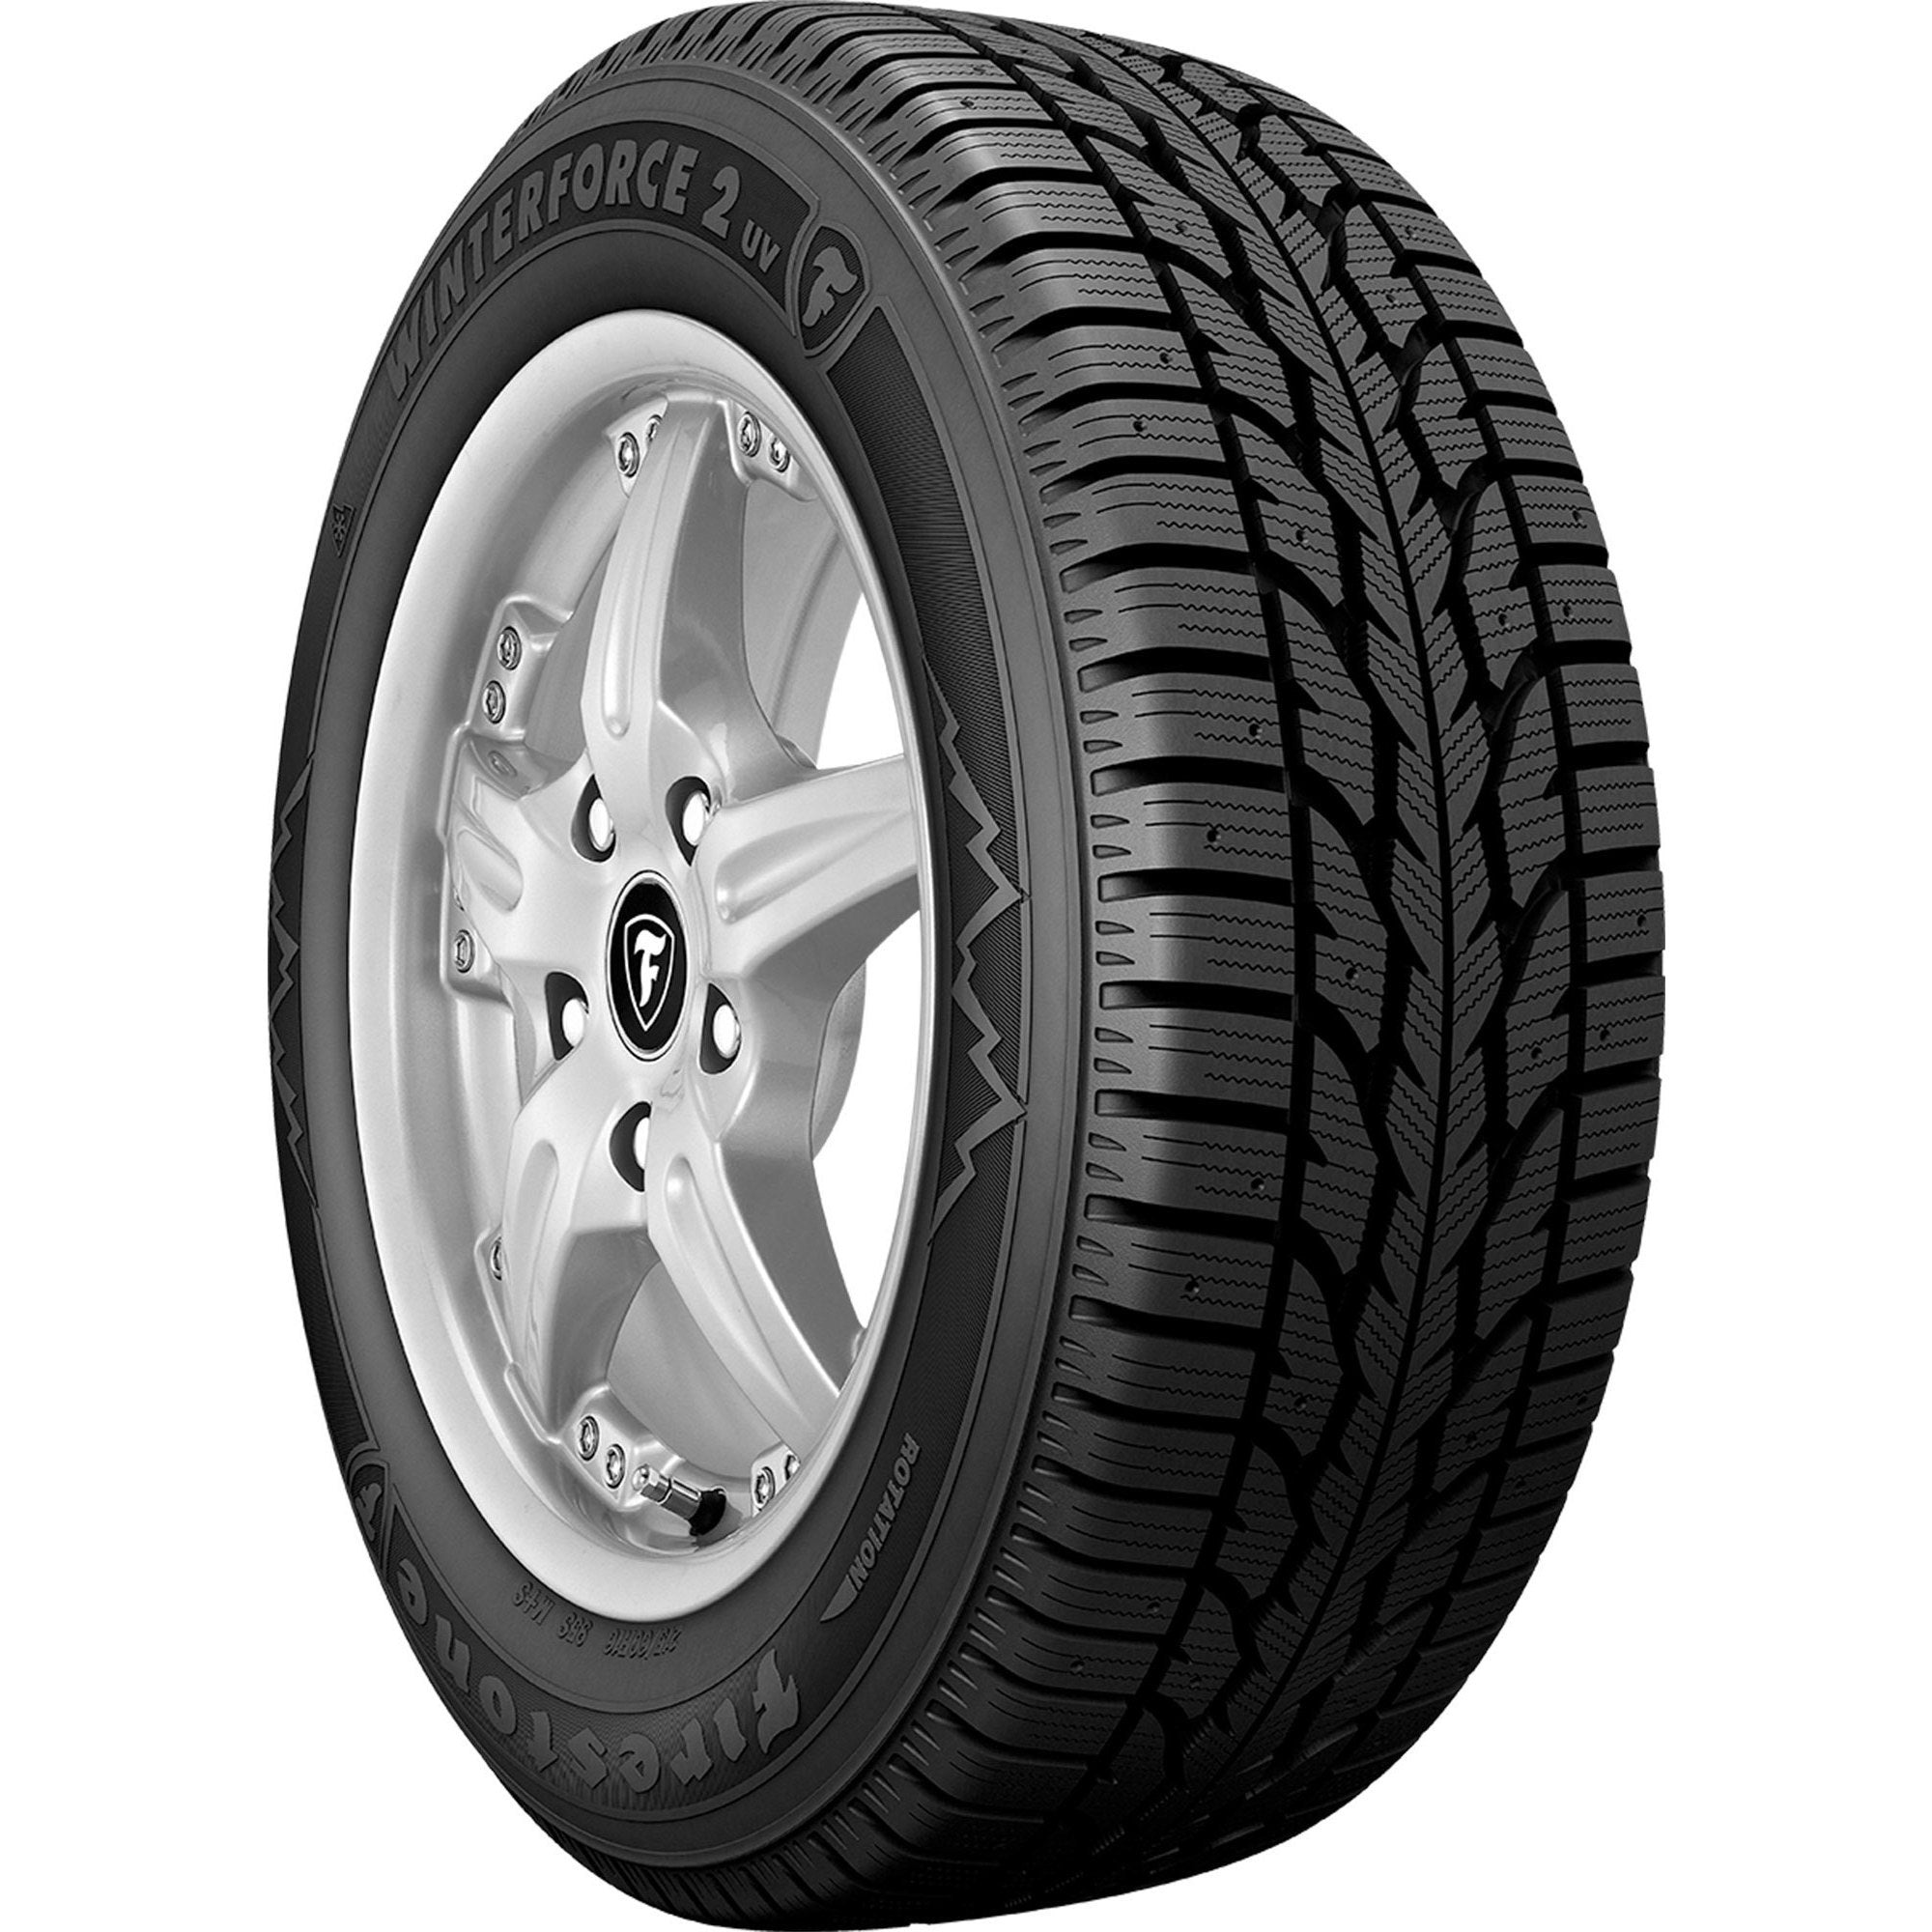 FIRESTONE WINTERFORCE2 UV P245/65R17 (29.5X9.7R 17) Tires